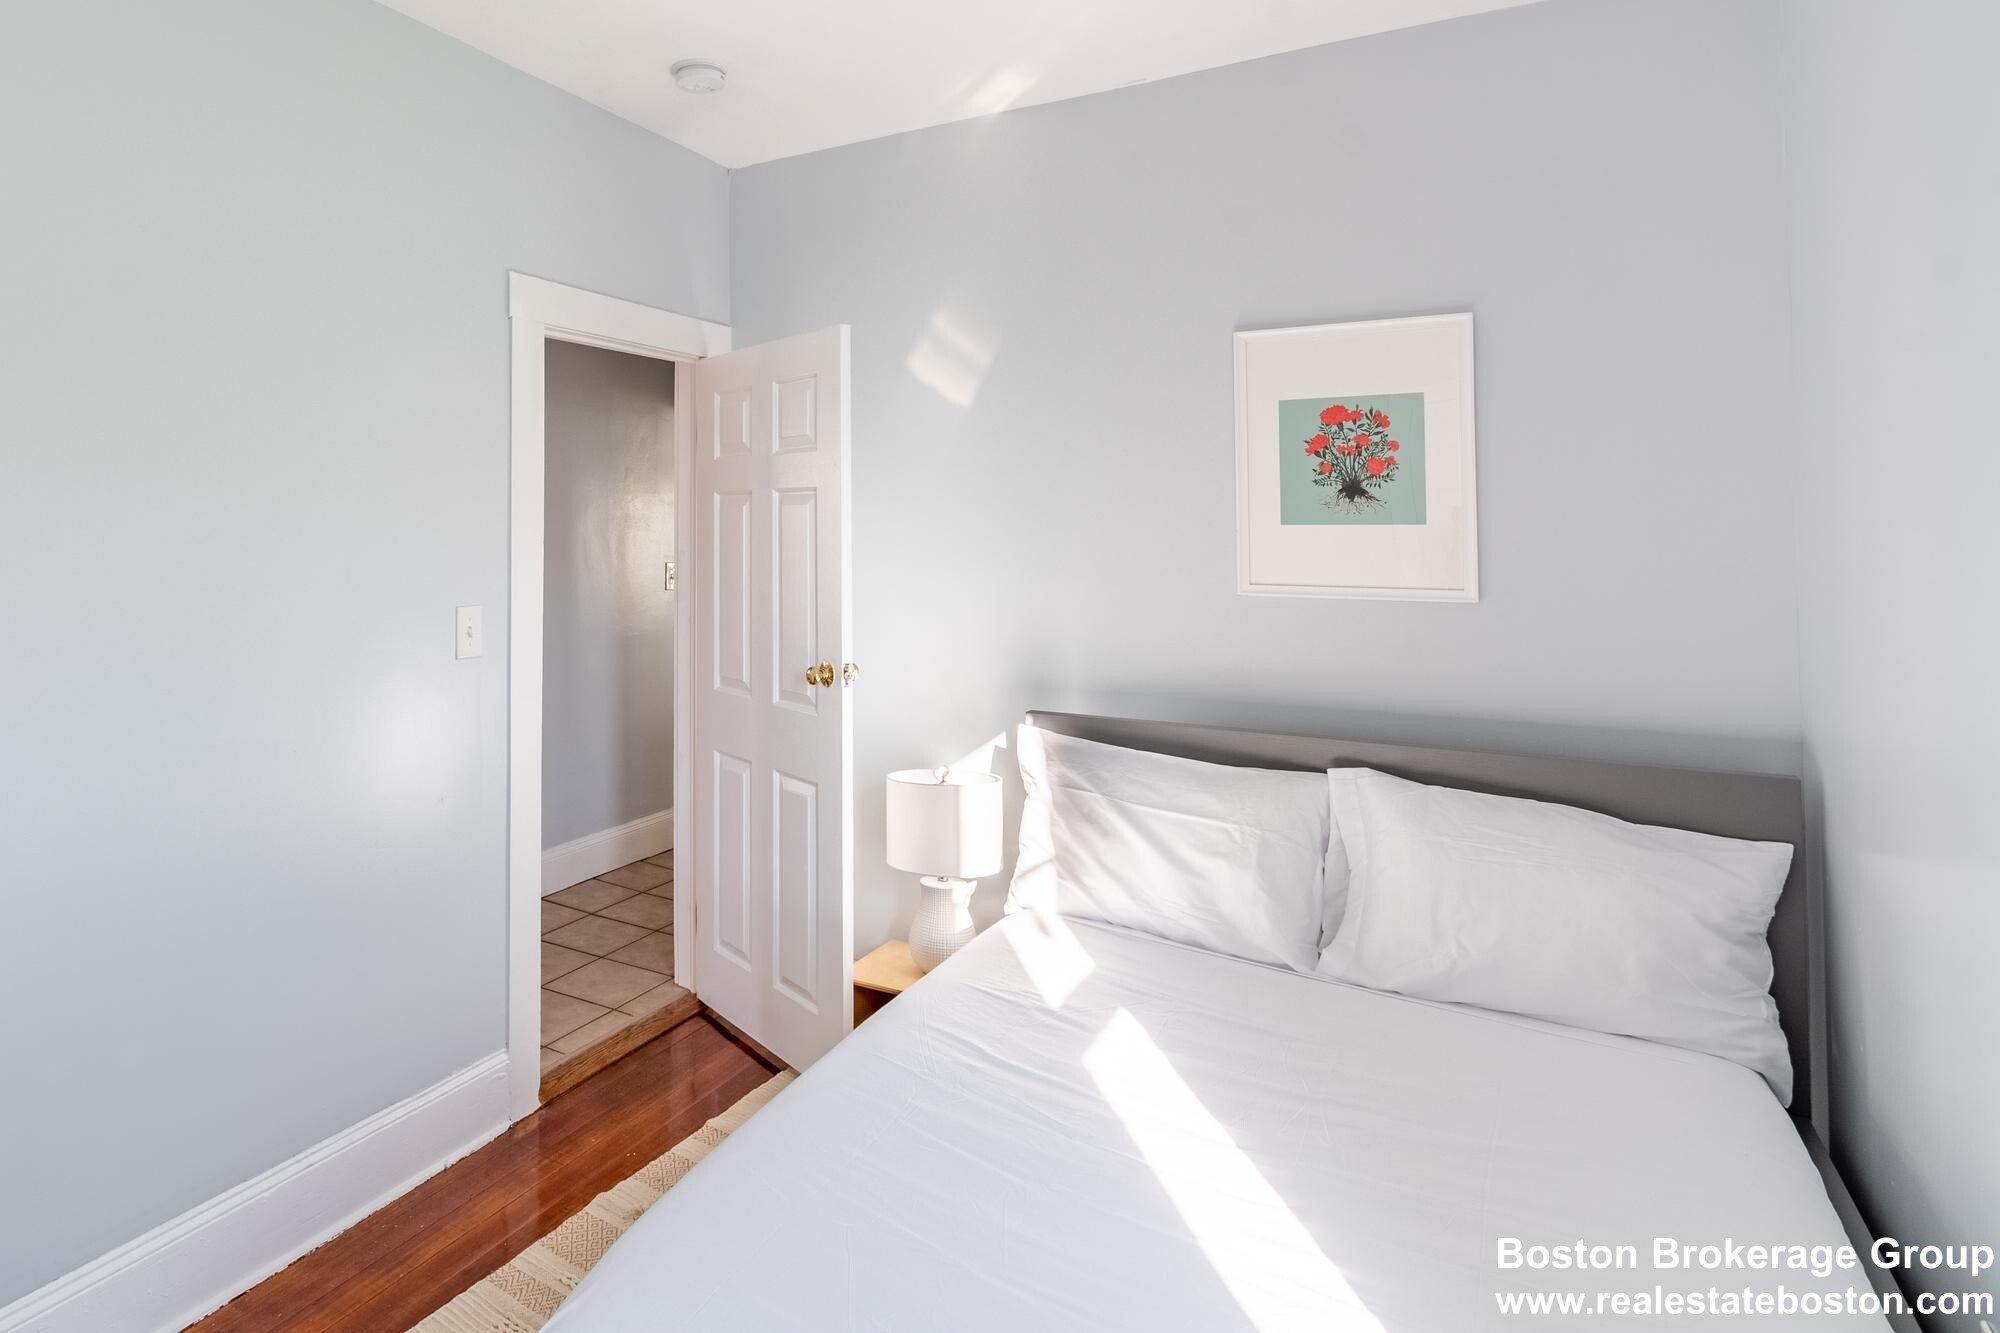 Photos of apartment on Groom St.,Boston MA 02125